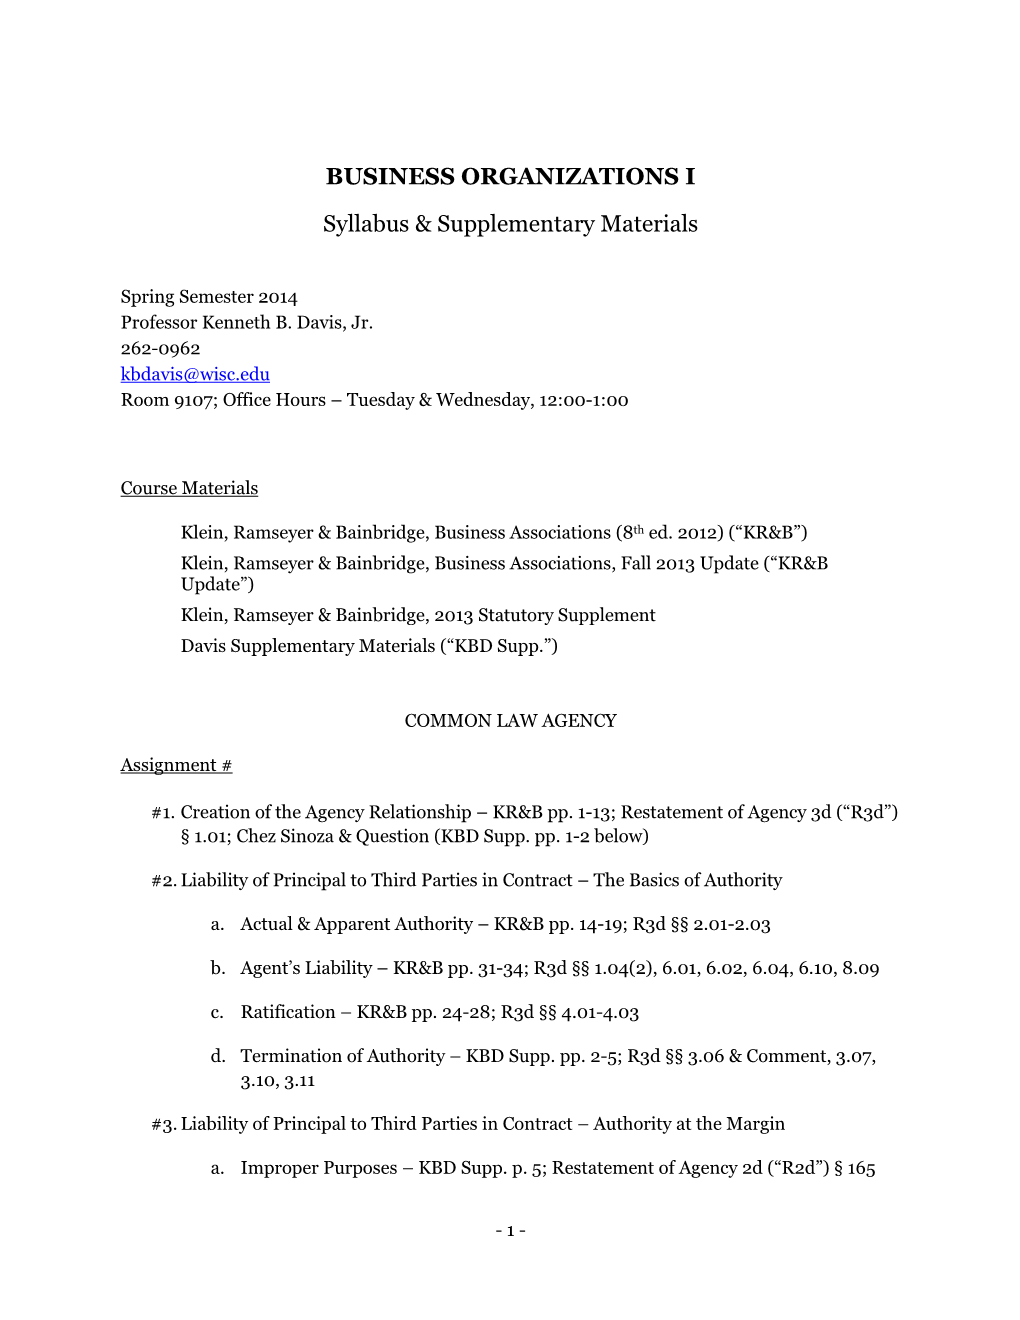 BUSINESS ORGANIZATIONS I Syllabus & Supplementary Materials